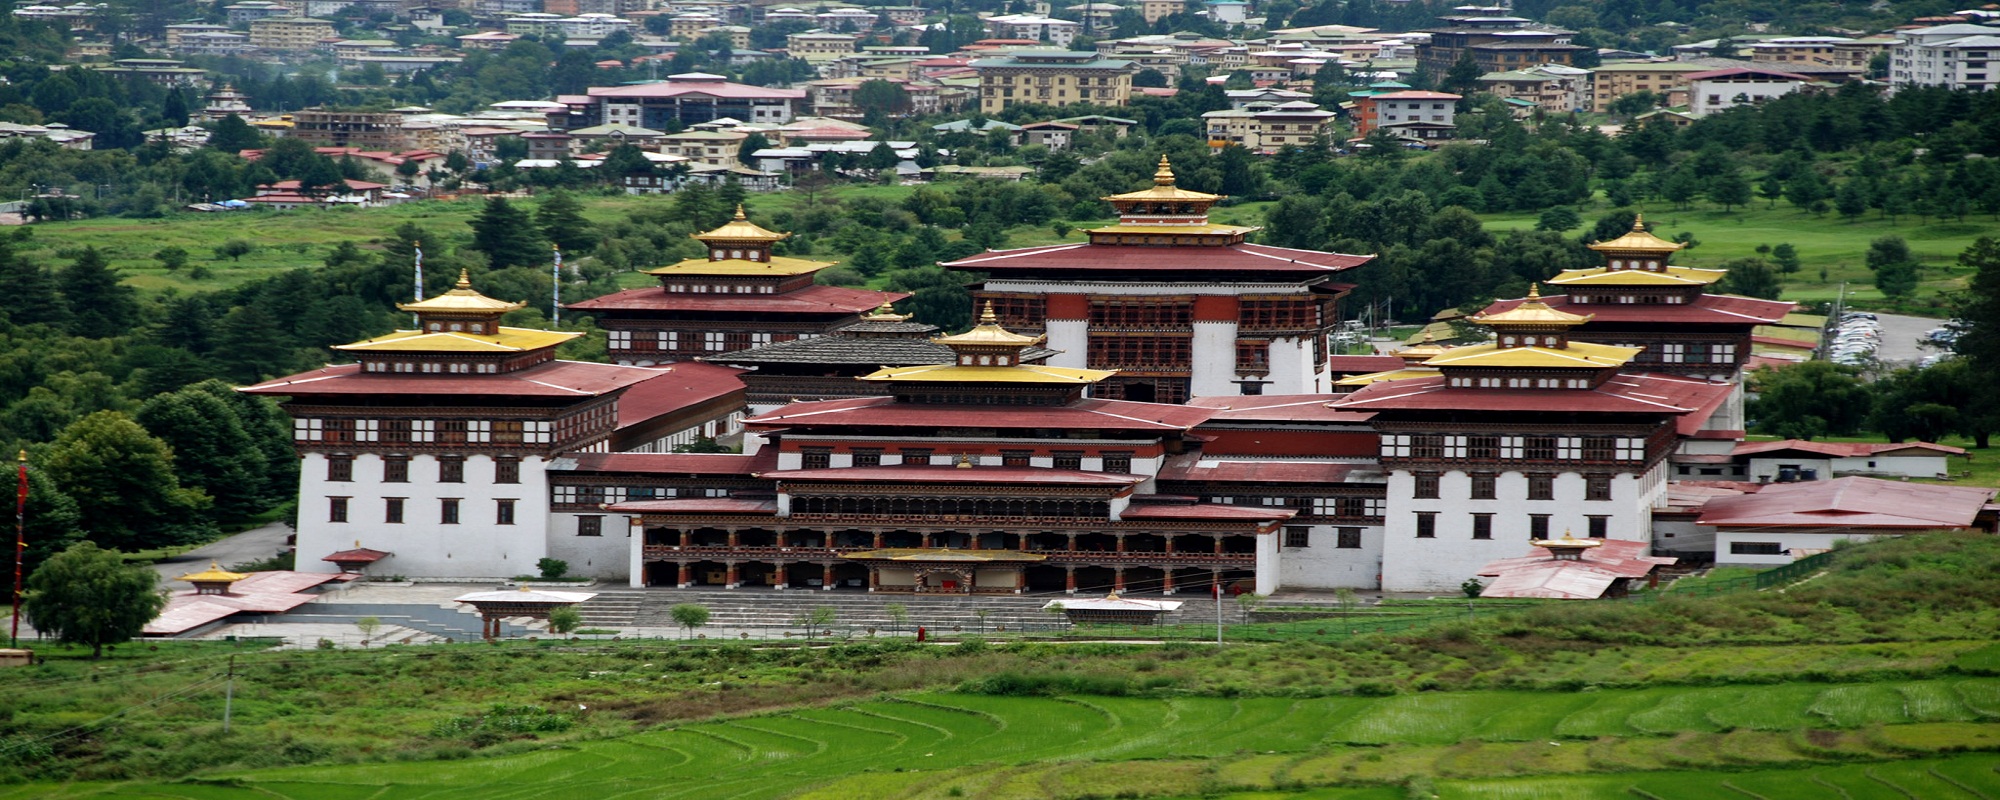 Bhutan City sight seeing tours